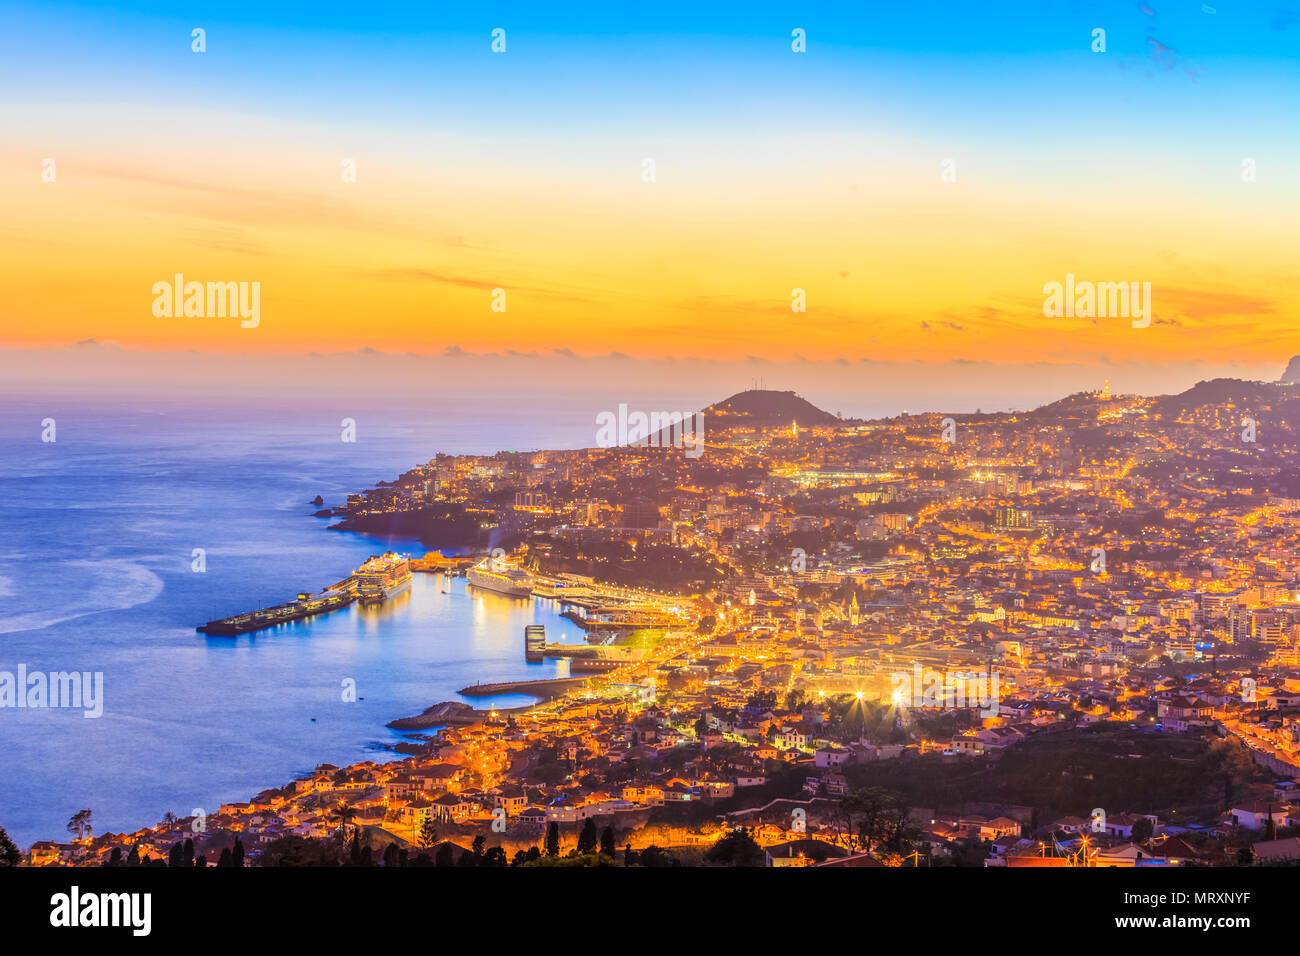 Escena nocturna con el paisaje urbano de la capital de Funchal, isla de Madeira, Portugal Foto de stock